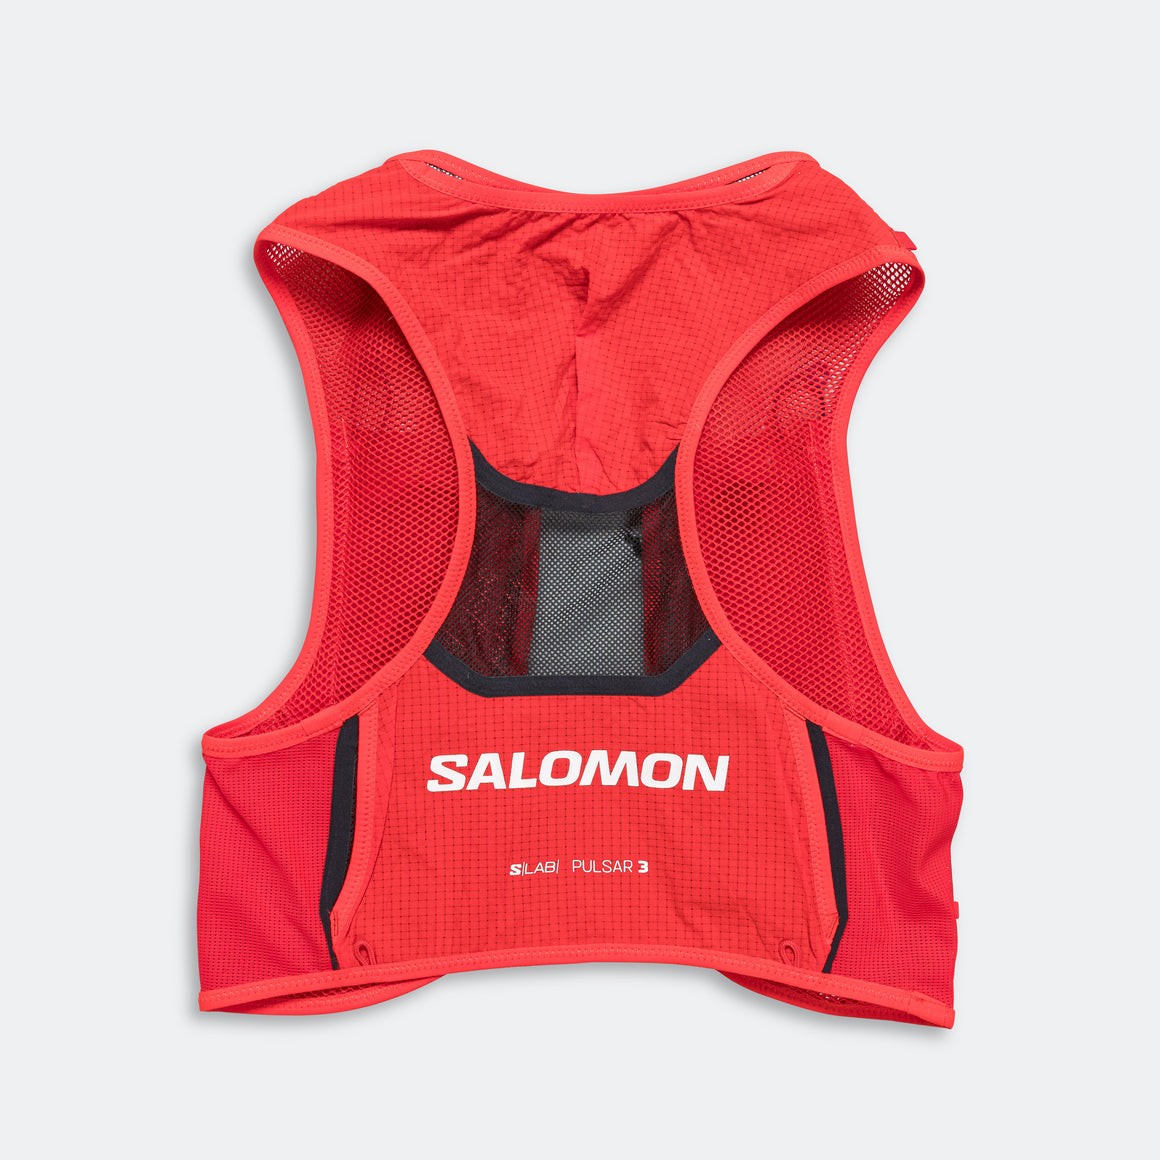 Salomon - S/LAB Pulsar 3 Set Vest - Fiery Red/Black - Up There Athletics